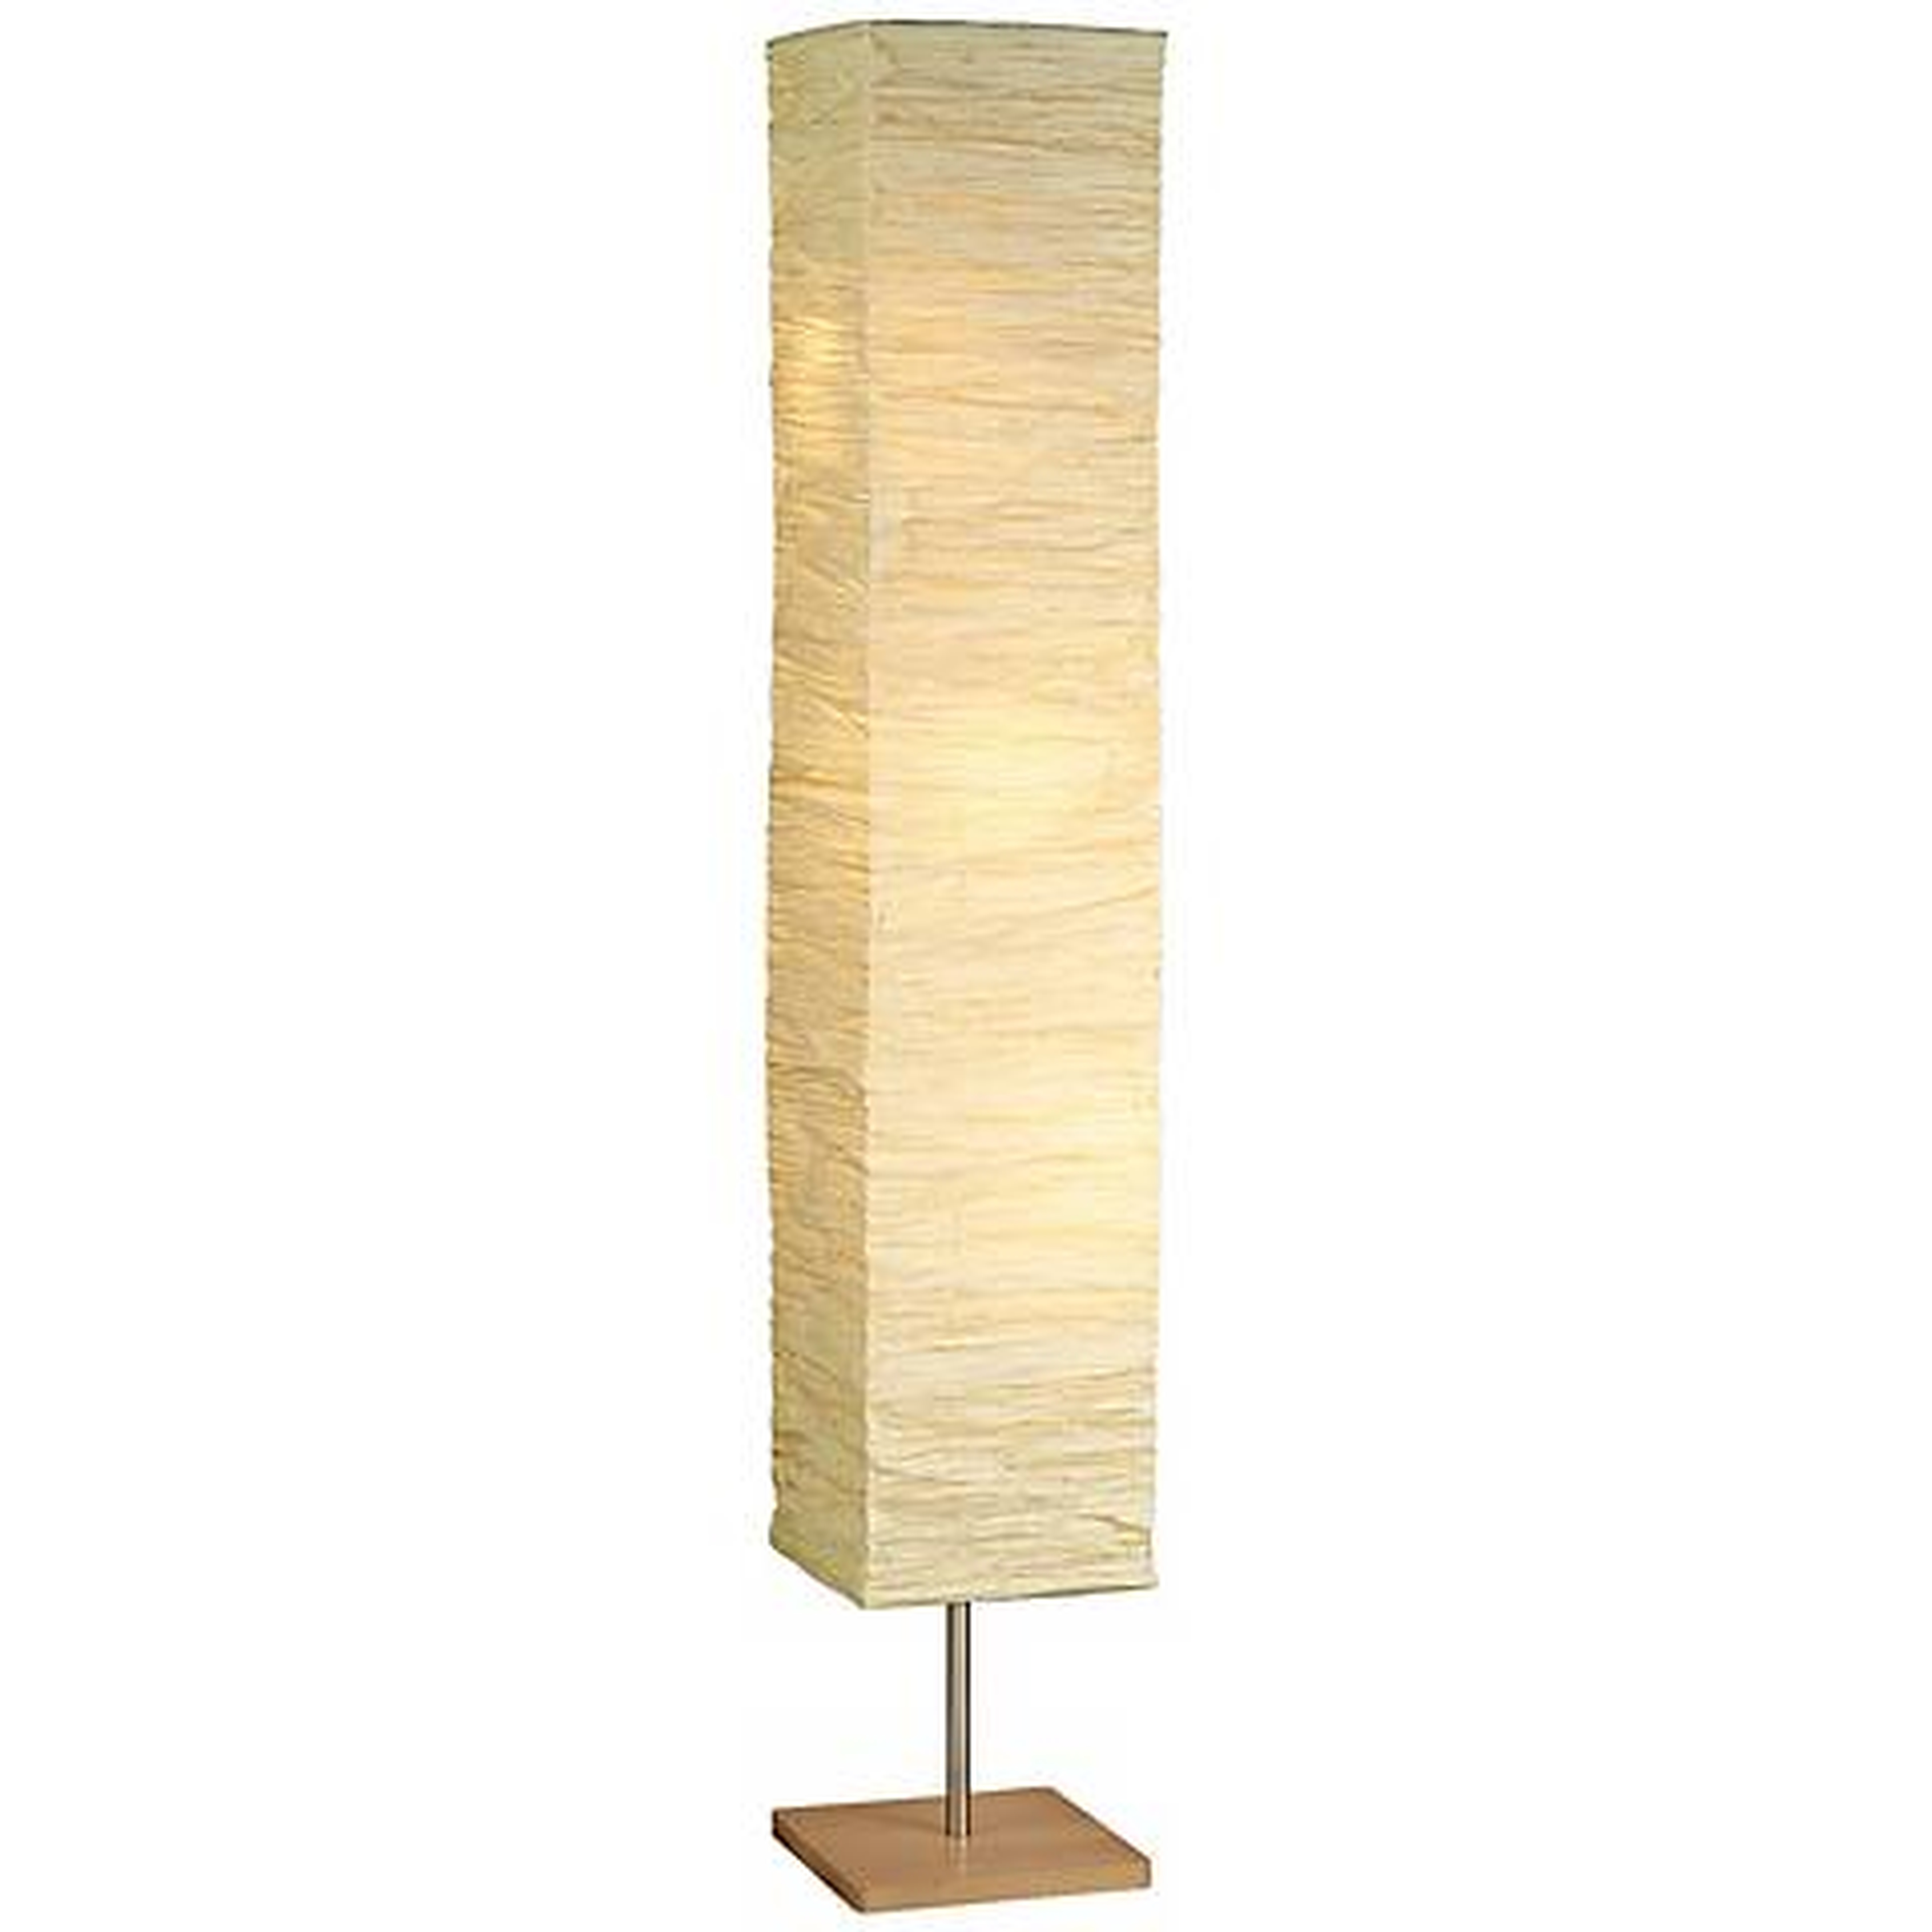 Crinkle Paper Square Floor Lamp - Lamps Plus